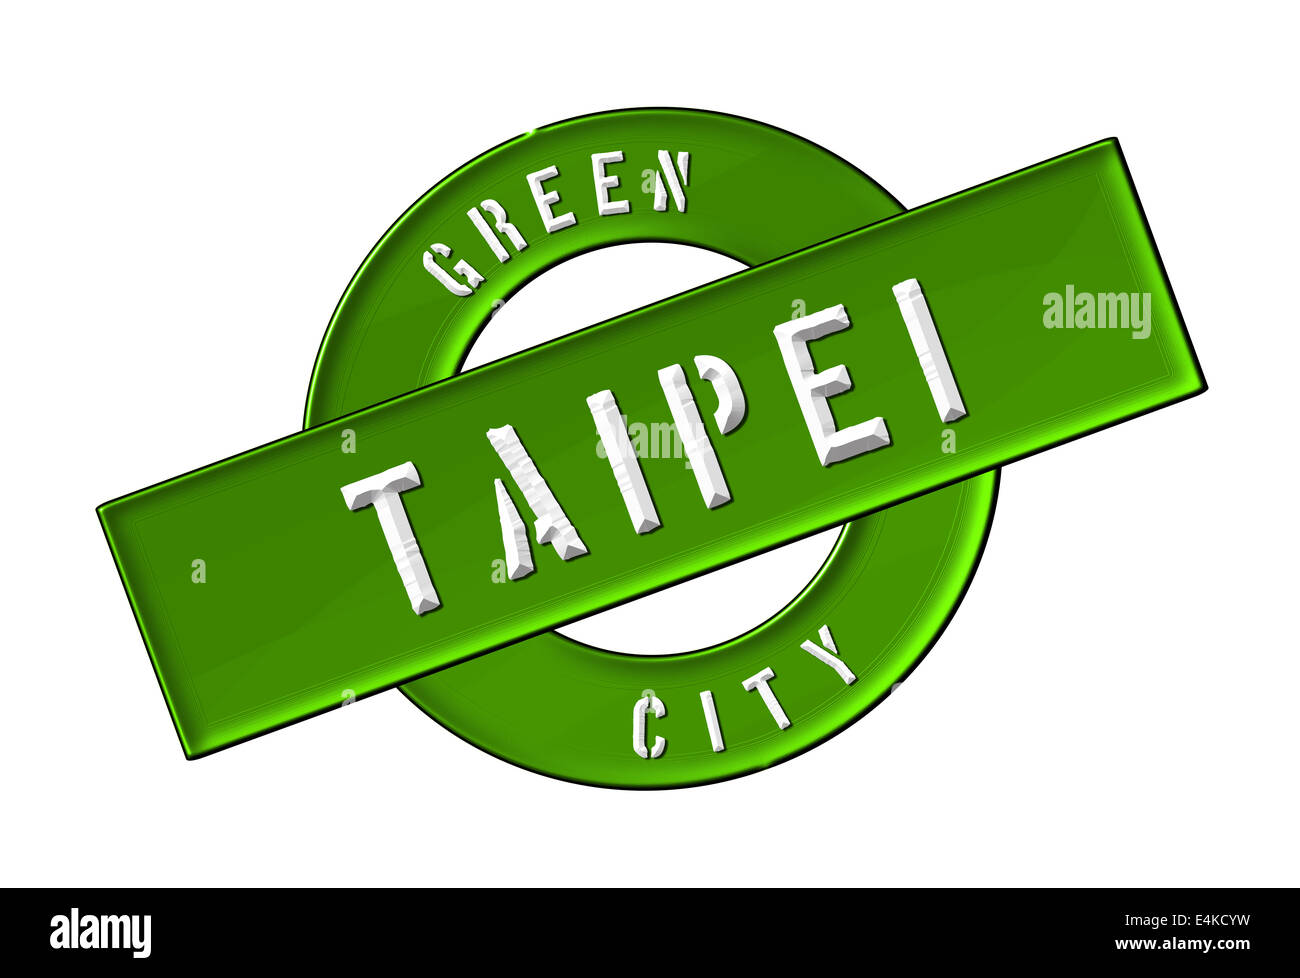 GREEN CITY TAIPEI Stock Photo